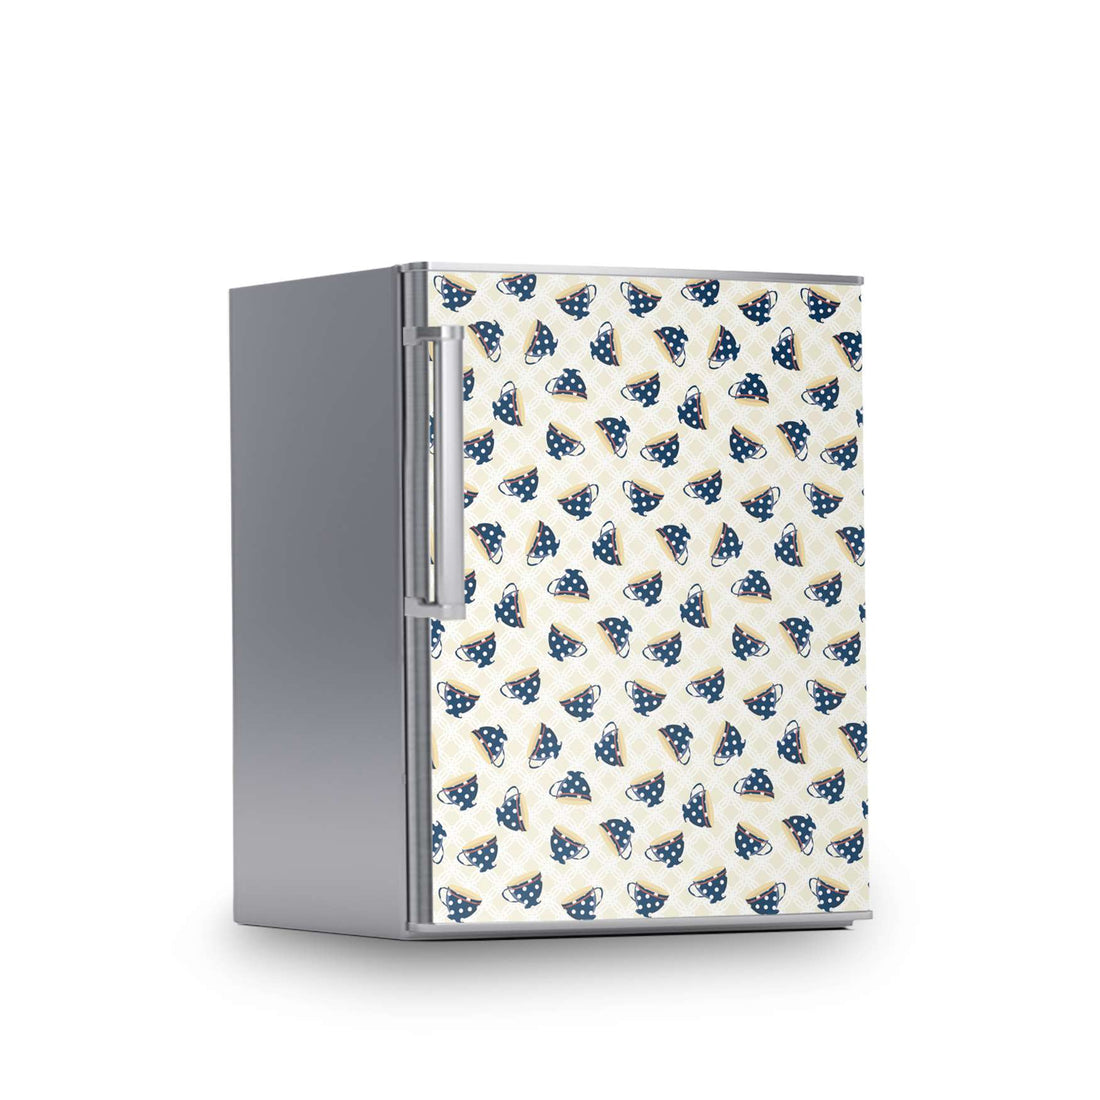 Kühlschrank Folie -Teatime- Kühlschrank 60x80 cm